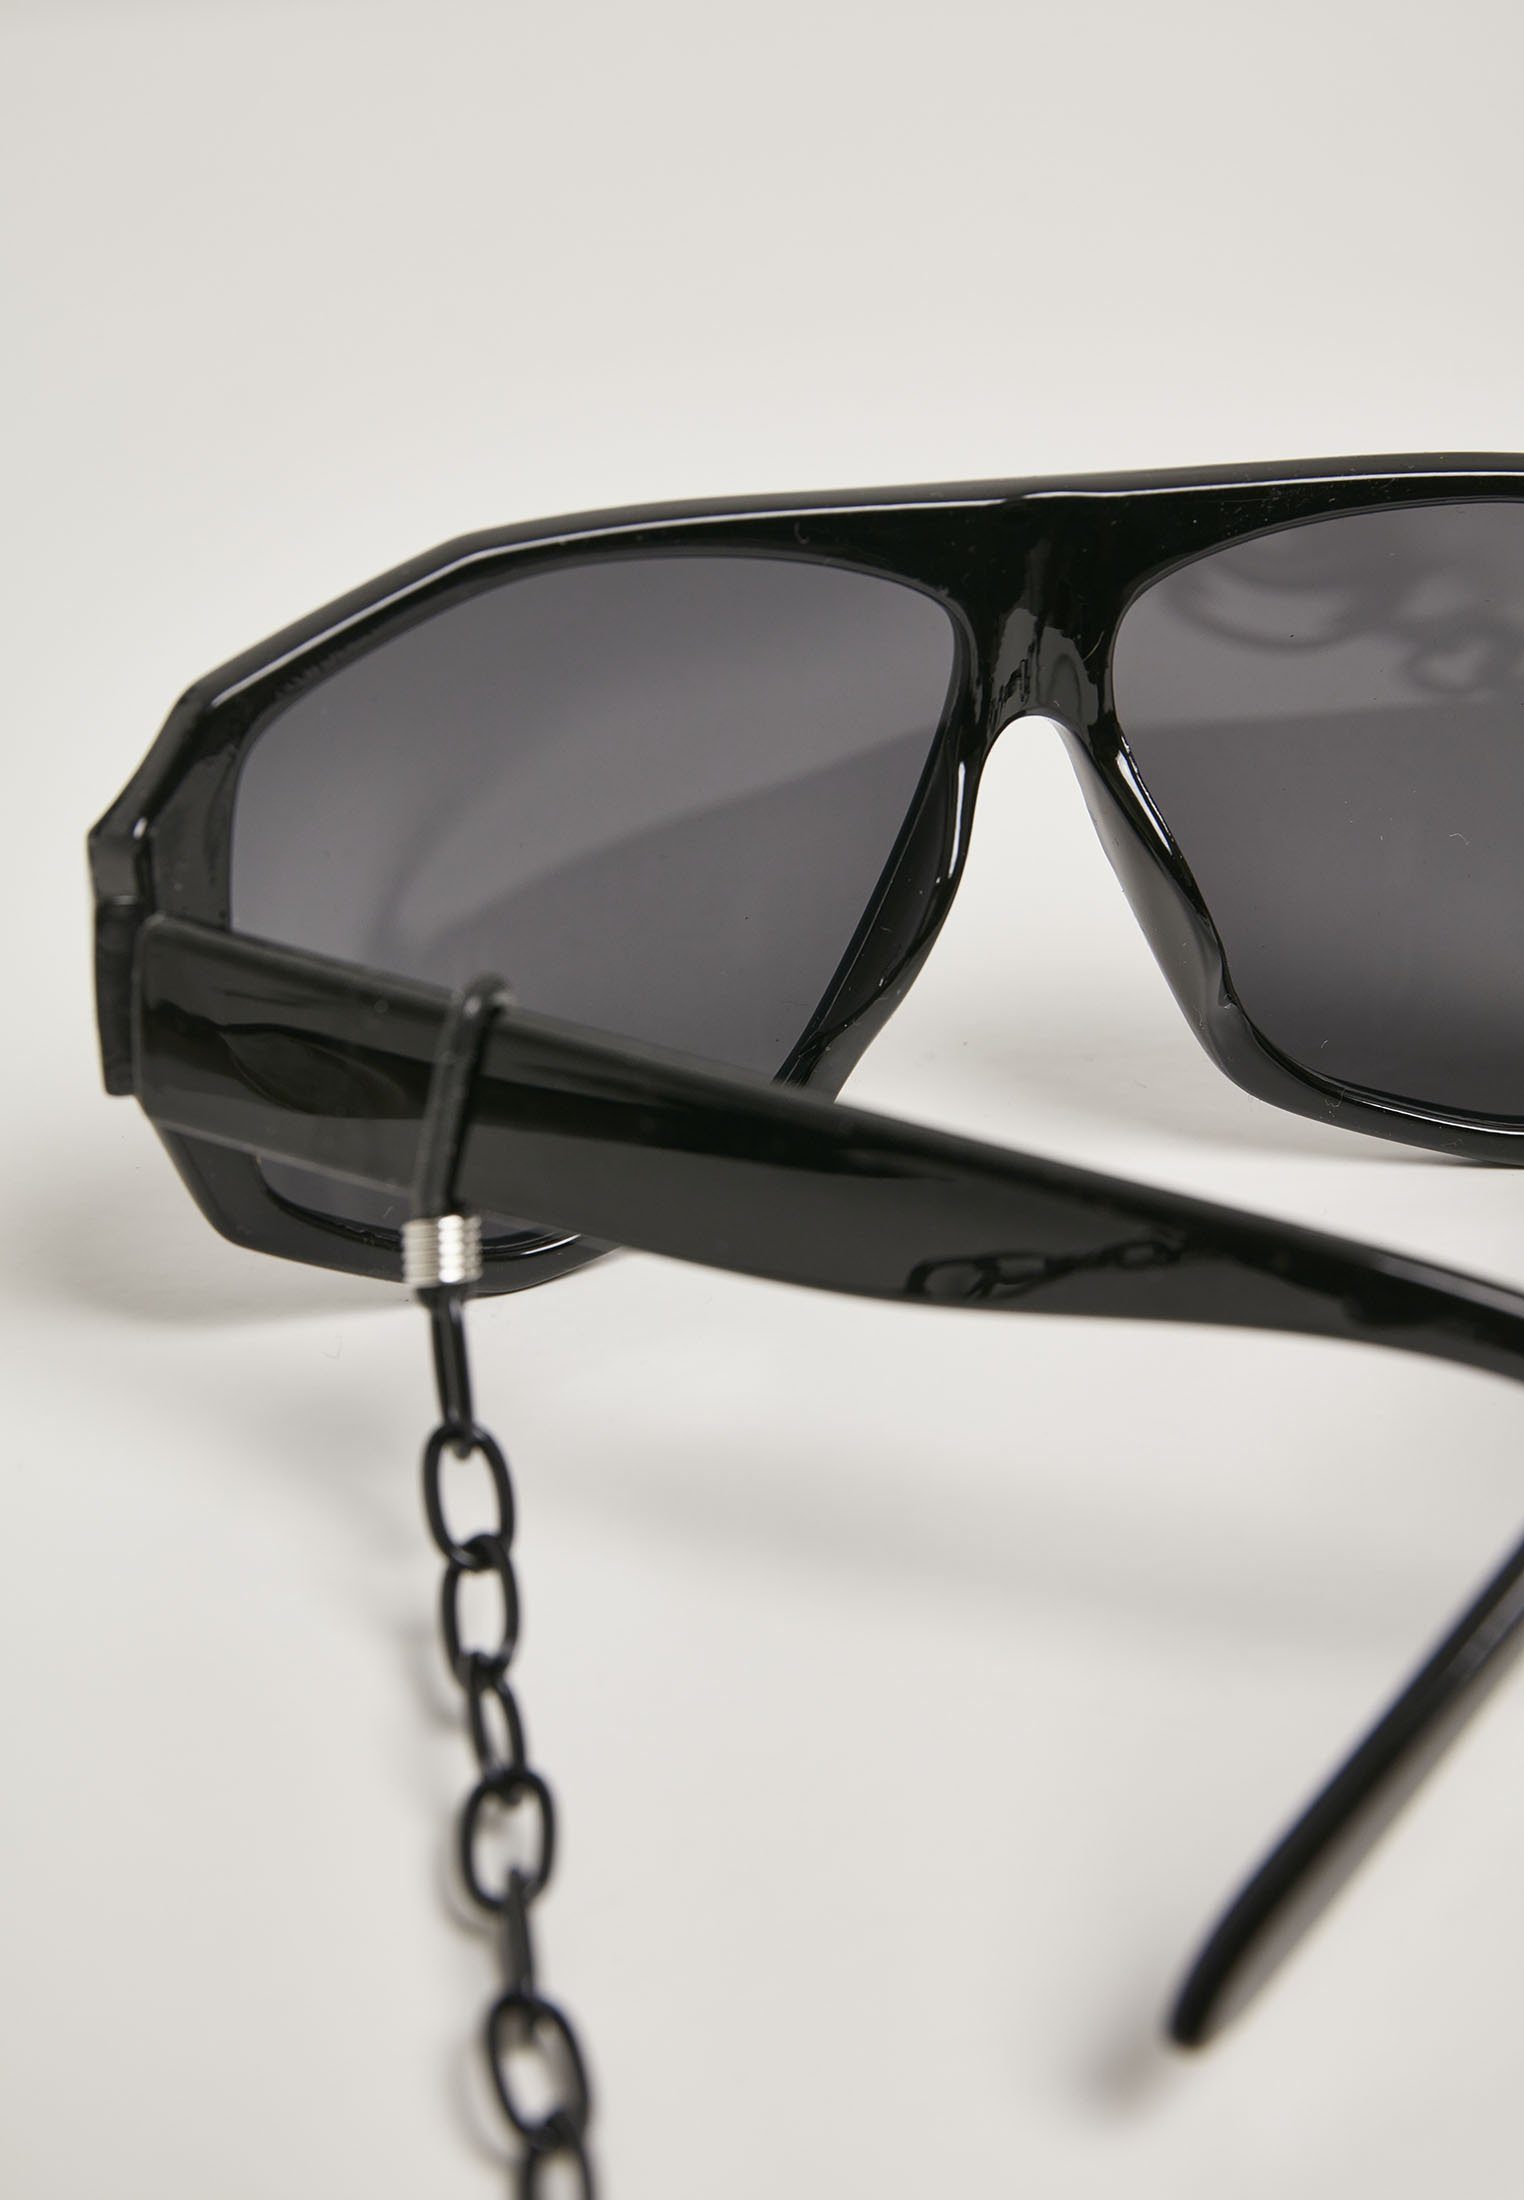 CLASSICS Chain Unisex Sunglasses TB2567 black/black URBAN 101 Chain Sonnenbrille 101